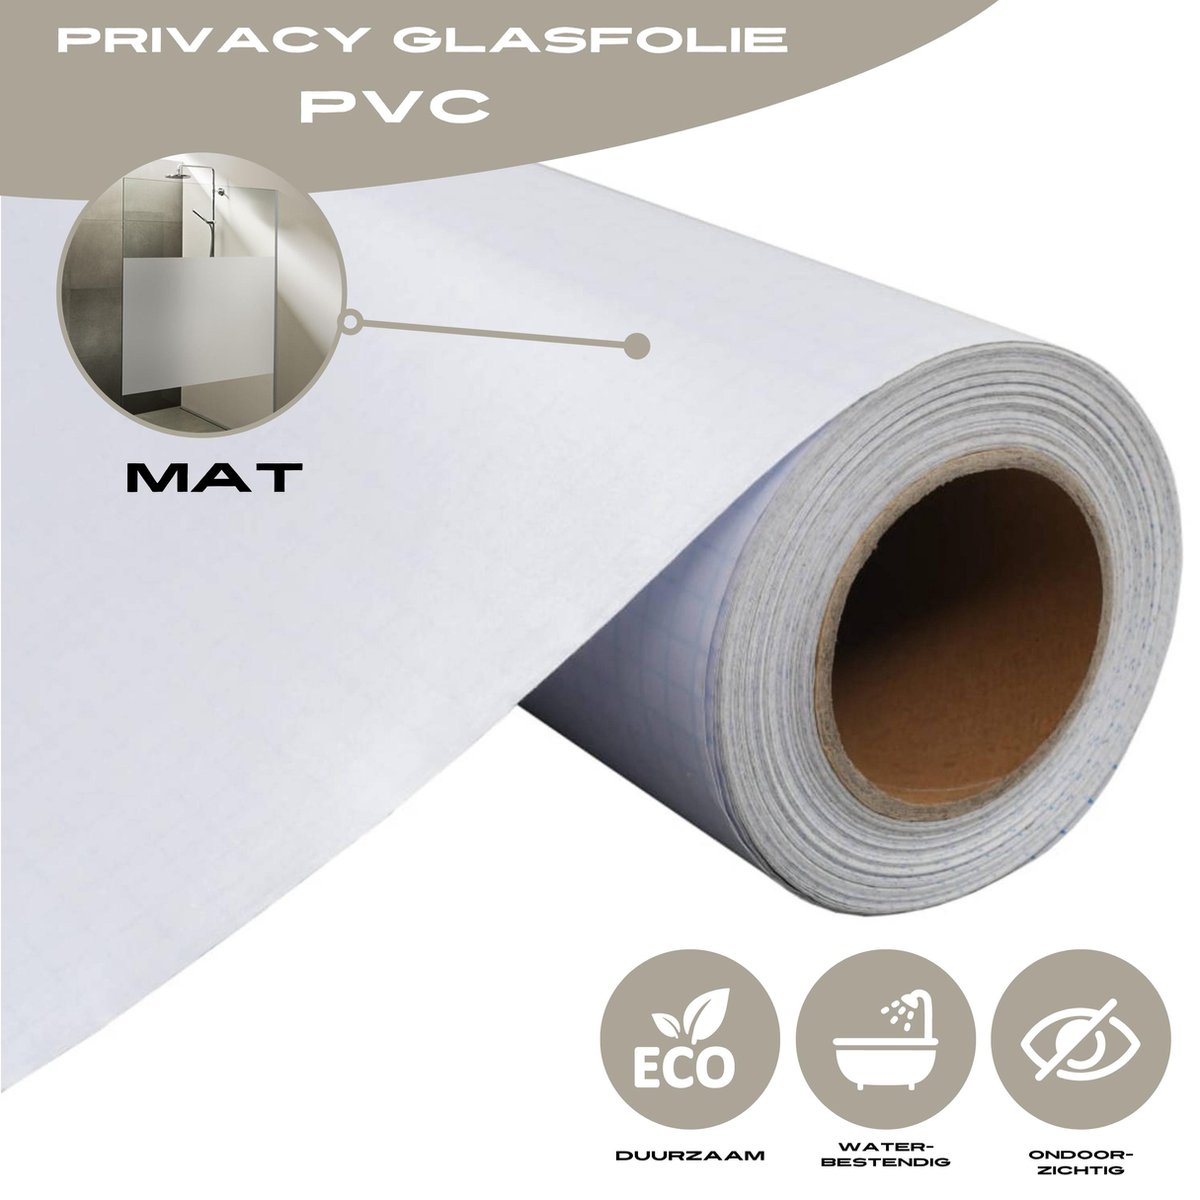 Privacyfolie - UV werend - werkt isolerend - zelfklevend - mat - melkglas - duurzaam - isolatie - folie - raamfolie - inkijkwerend - ondoorzichtig wit - matglas - badkamerfolie - badkamer - huiskamer - keuken - slaapkamer - glasfolie - 0,9 m x 100 m